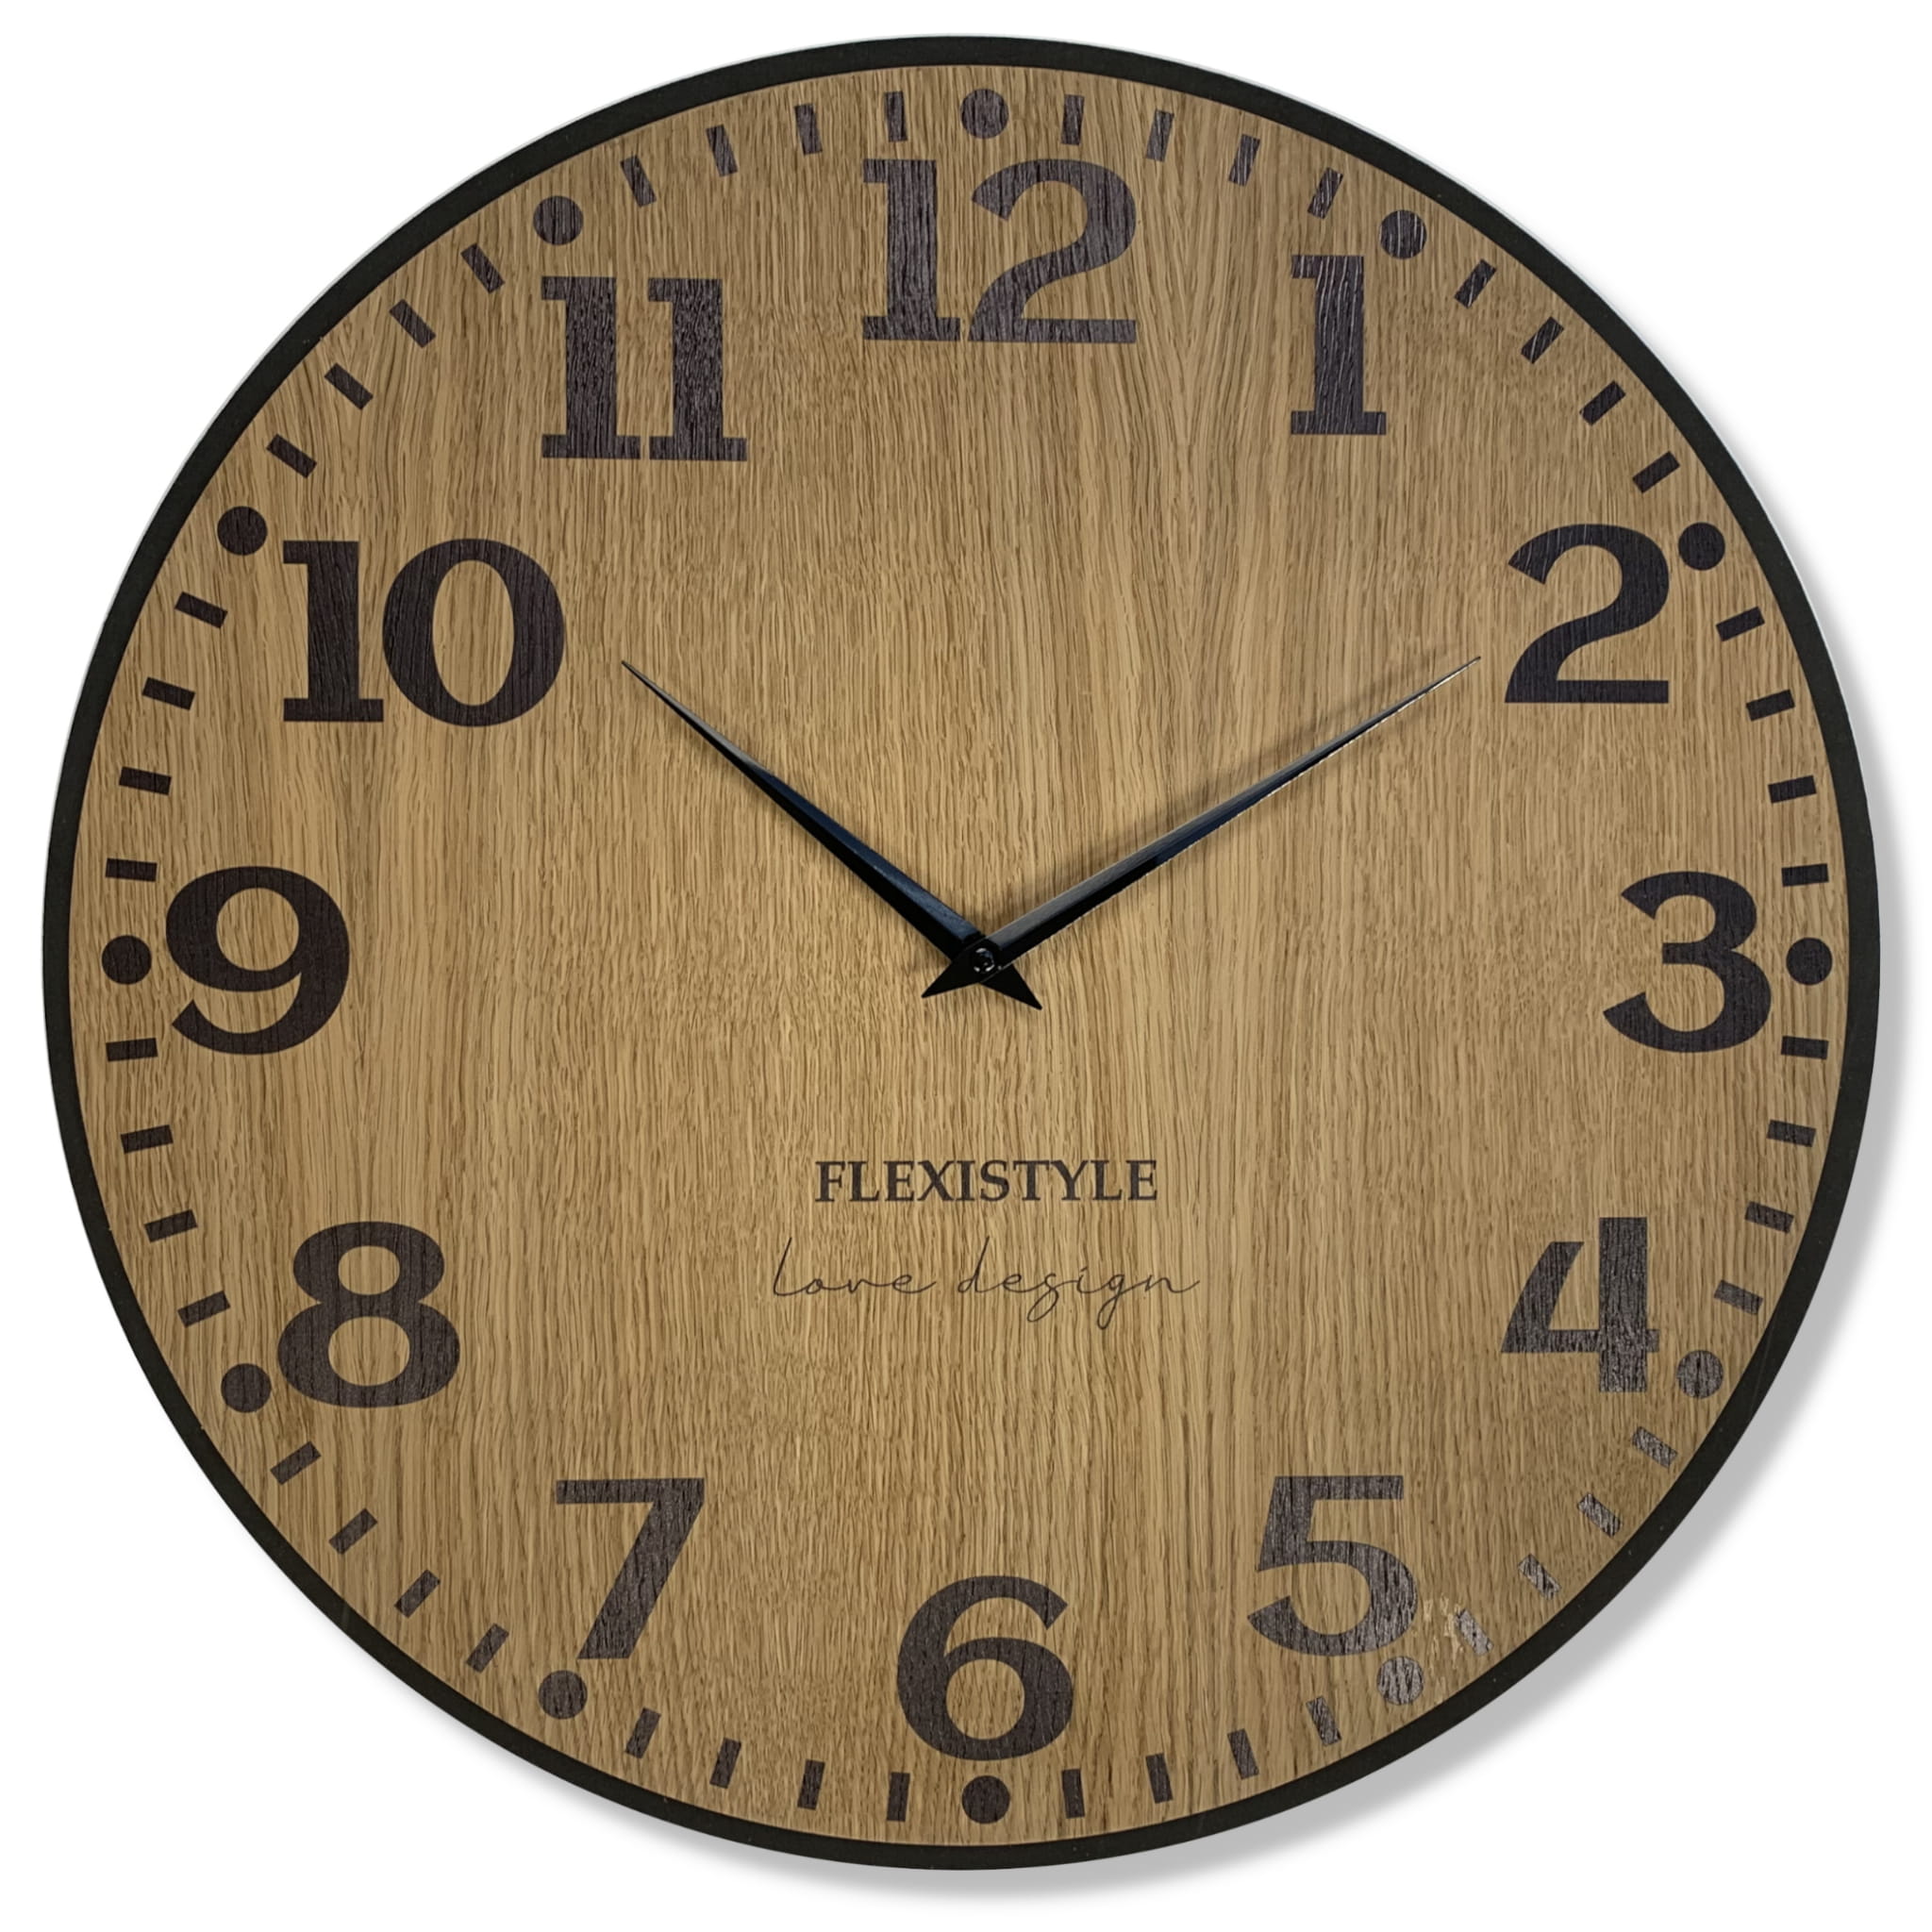 Dubové nástenné hodiny Elegante Flex z227-1d-1-x tmavohnedé, 50 cm 